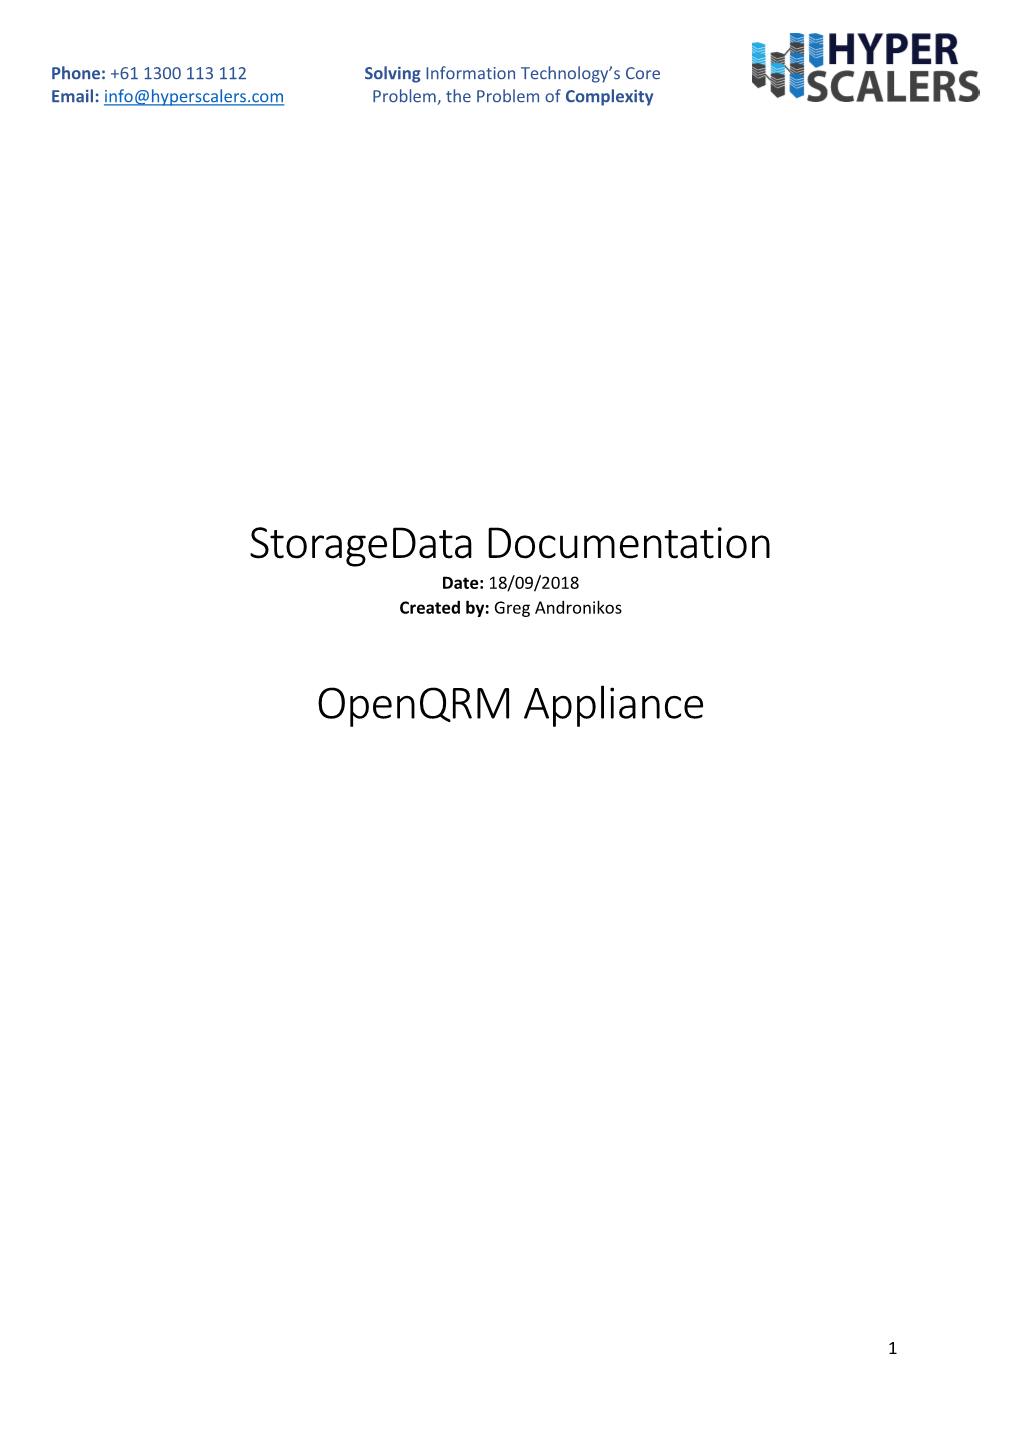 Storagedata Documentation Openqrm Appliance